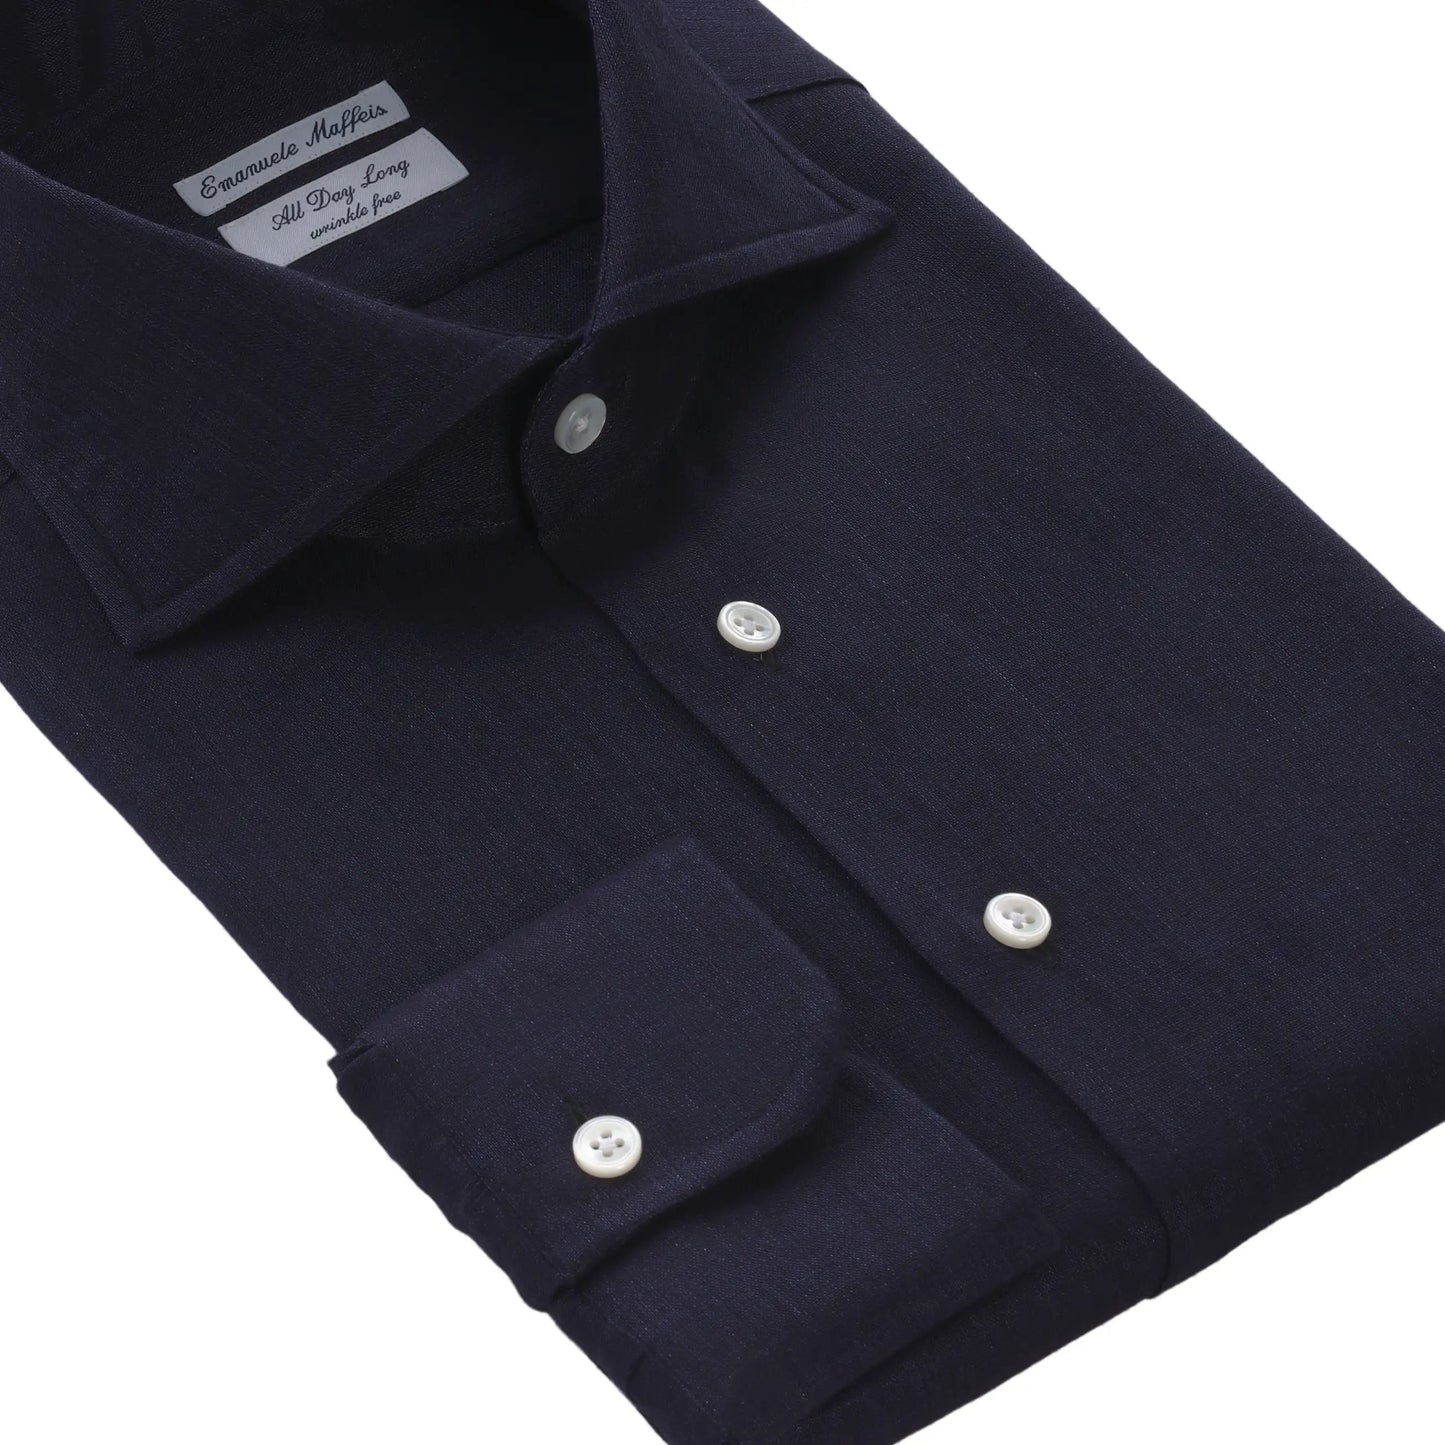 Emanuele Maffeis "All Day Long" Linen Shirt in Dark Blue - SARTALE